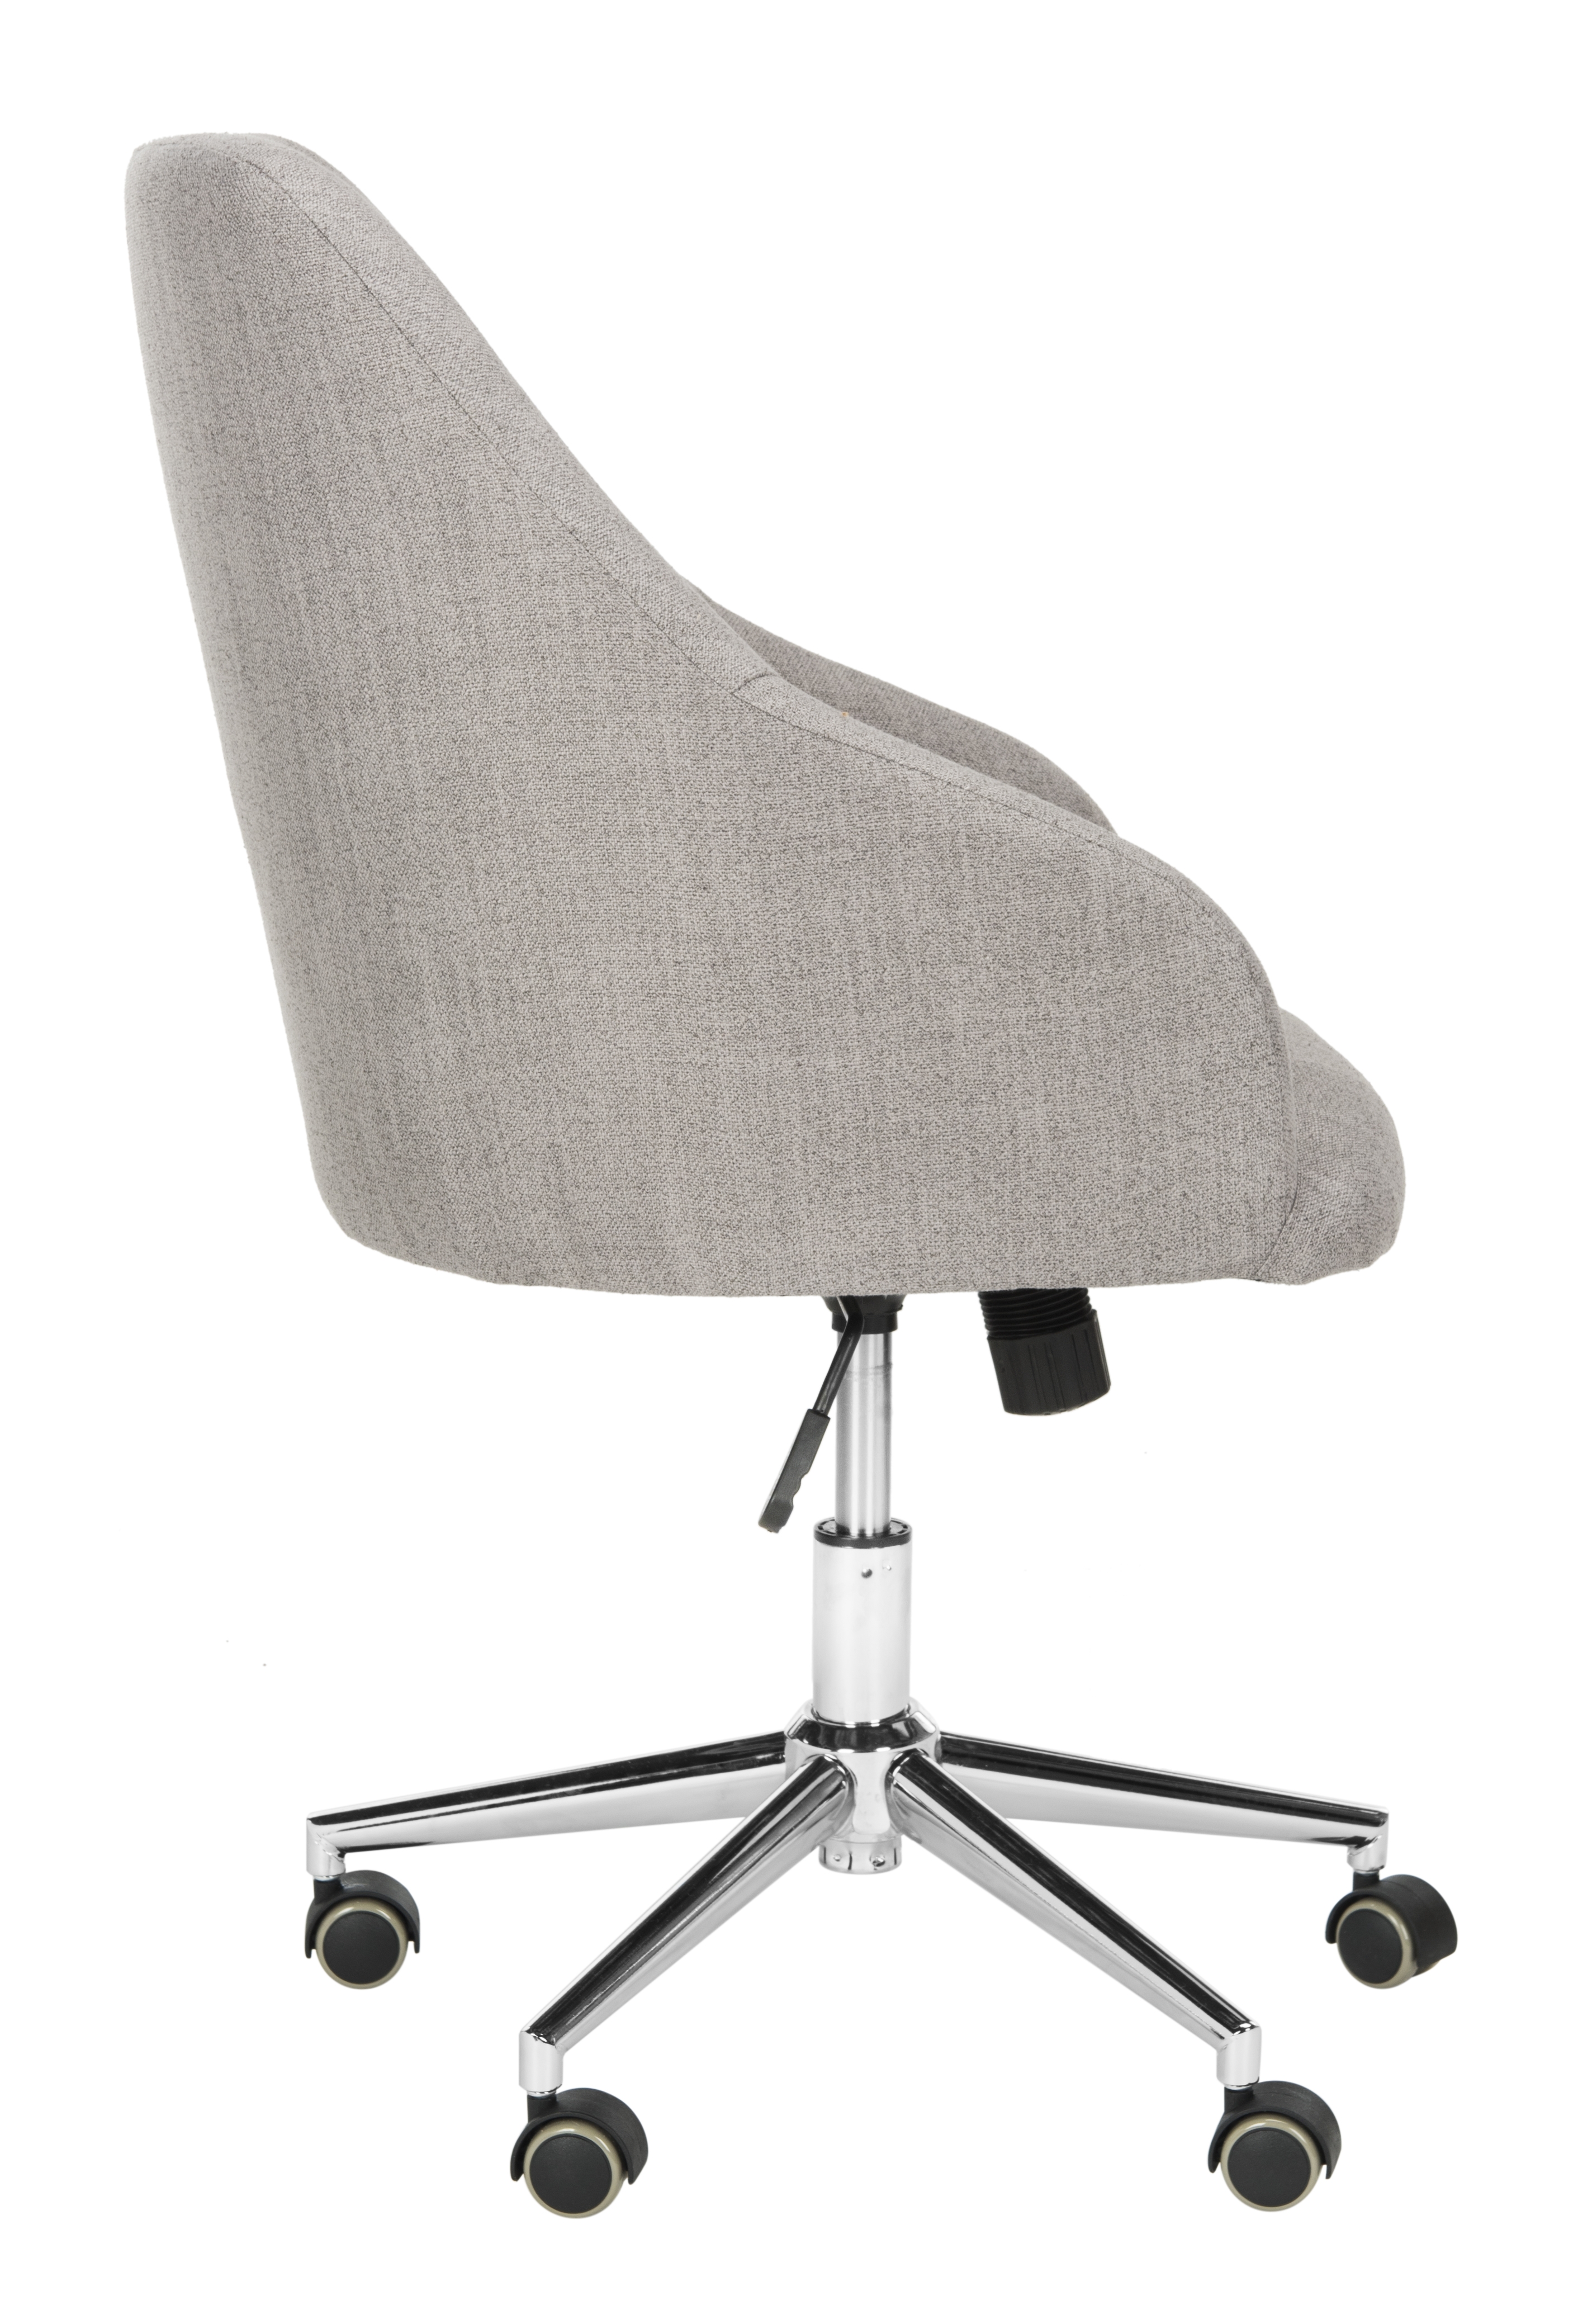 Adrienne Linen Chrome Leg Swivel Office Chair - Grey/Chrome - Arlo Home - Image 1